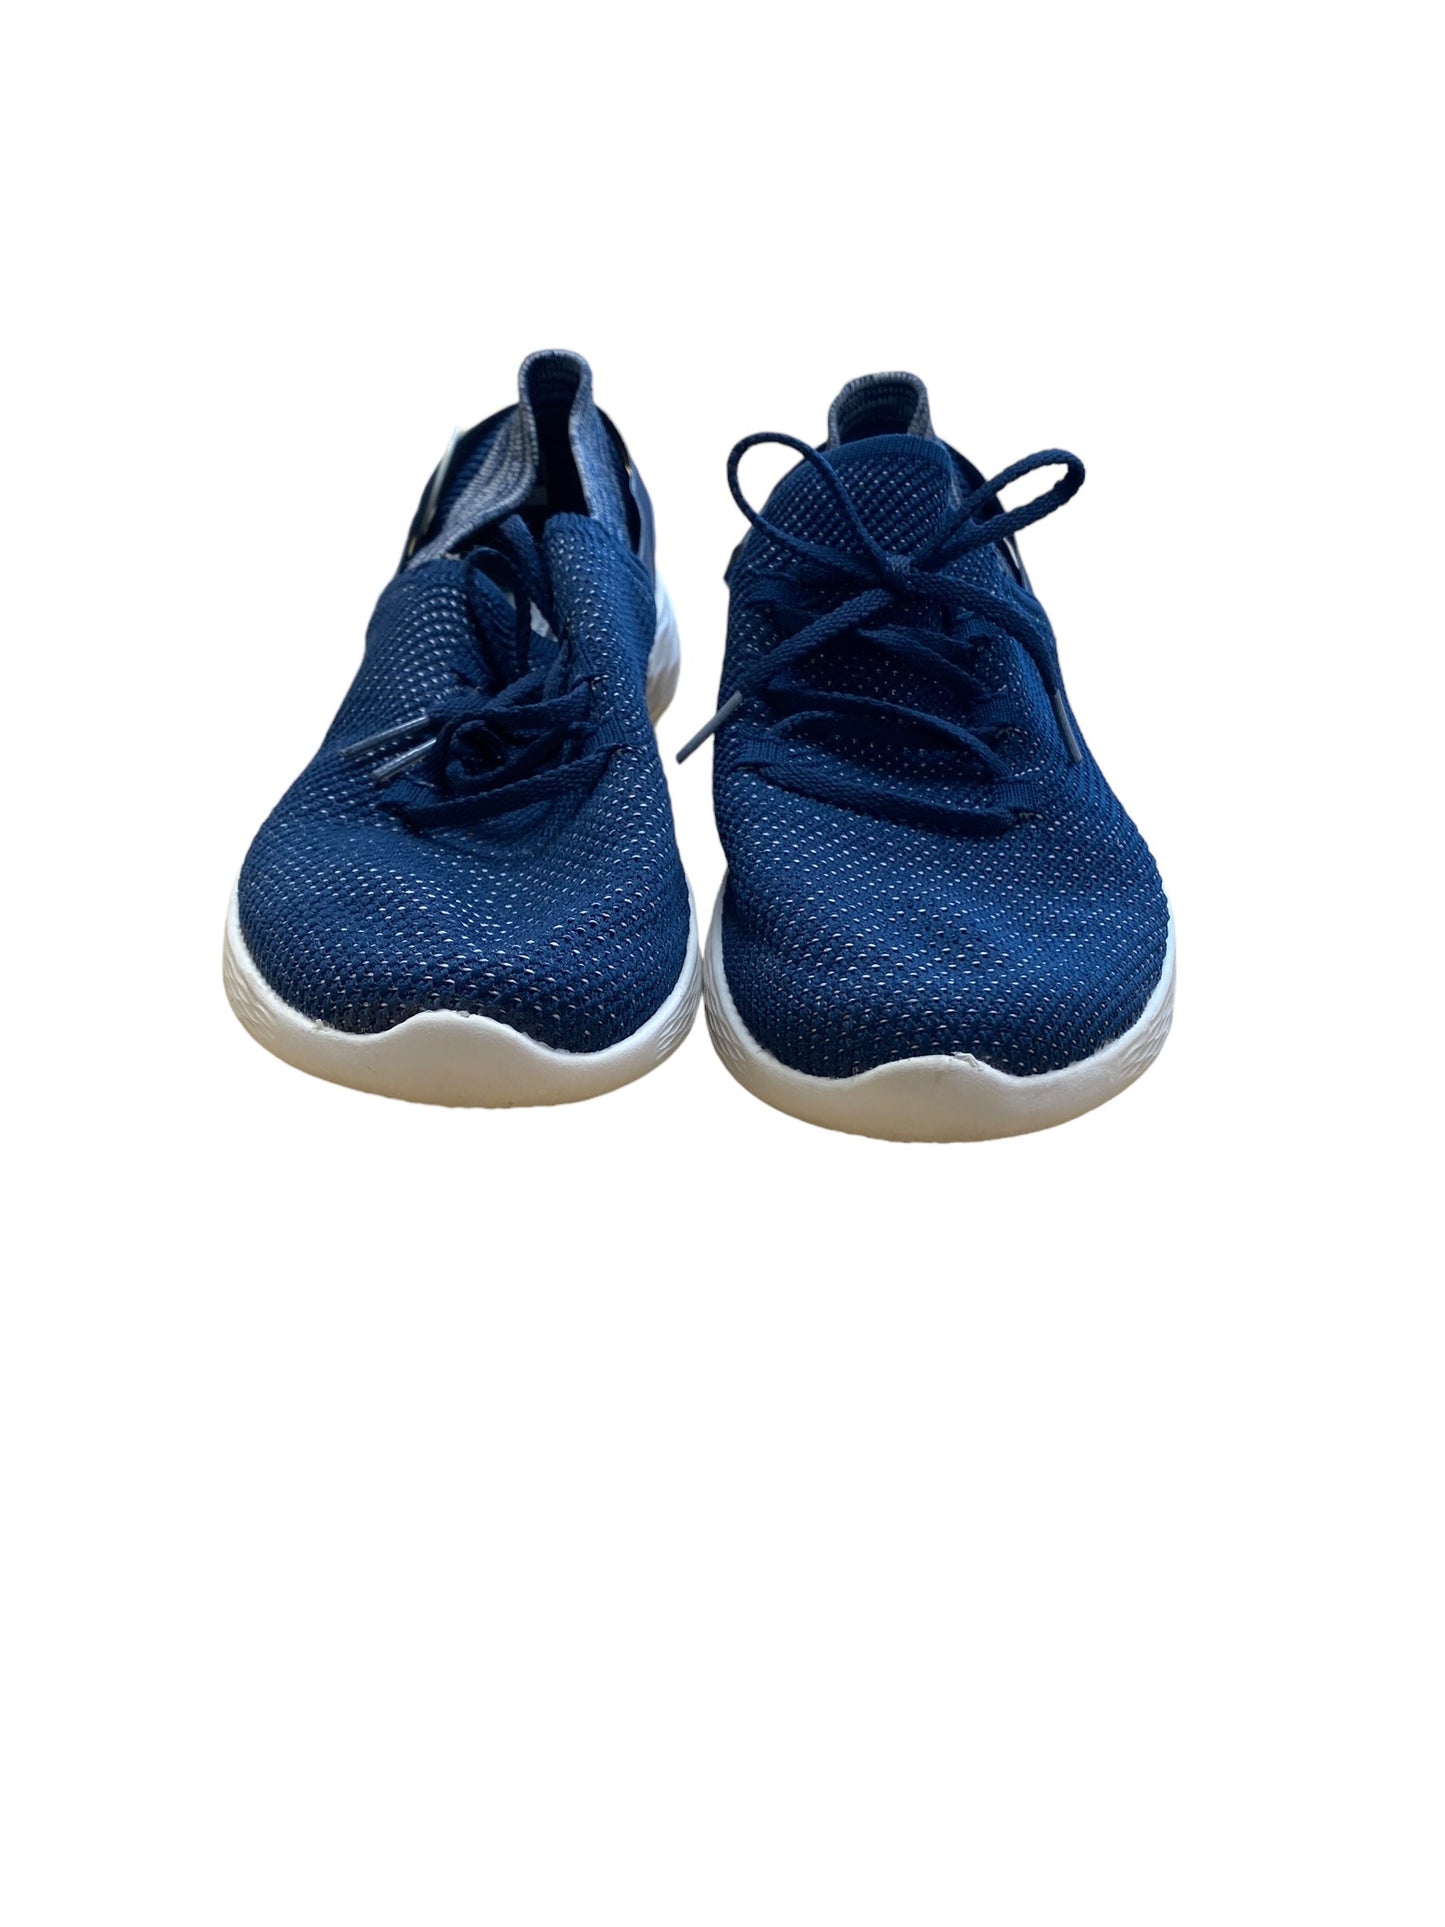 Blue Shoes Athletic Skechers, Size 7